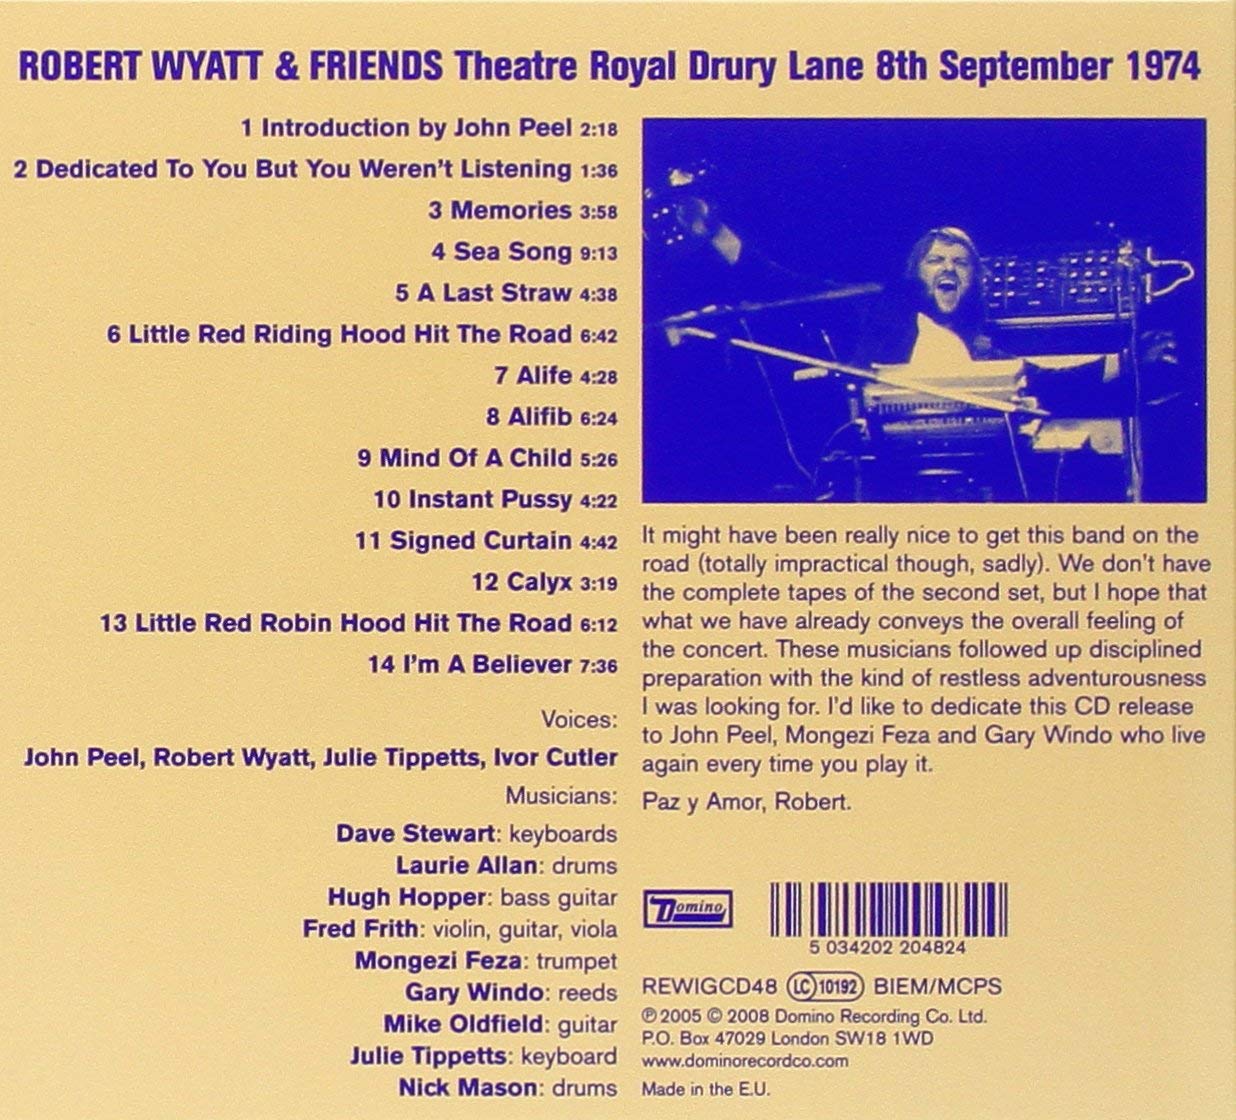 Theatre Royal Drury Lane | Robert Wyatt